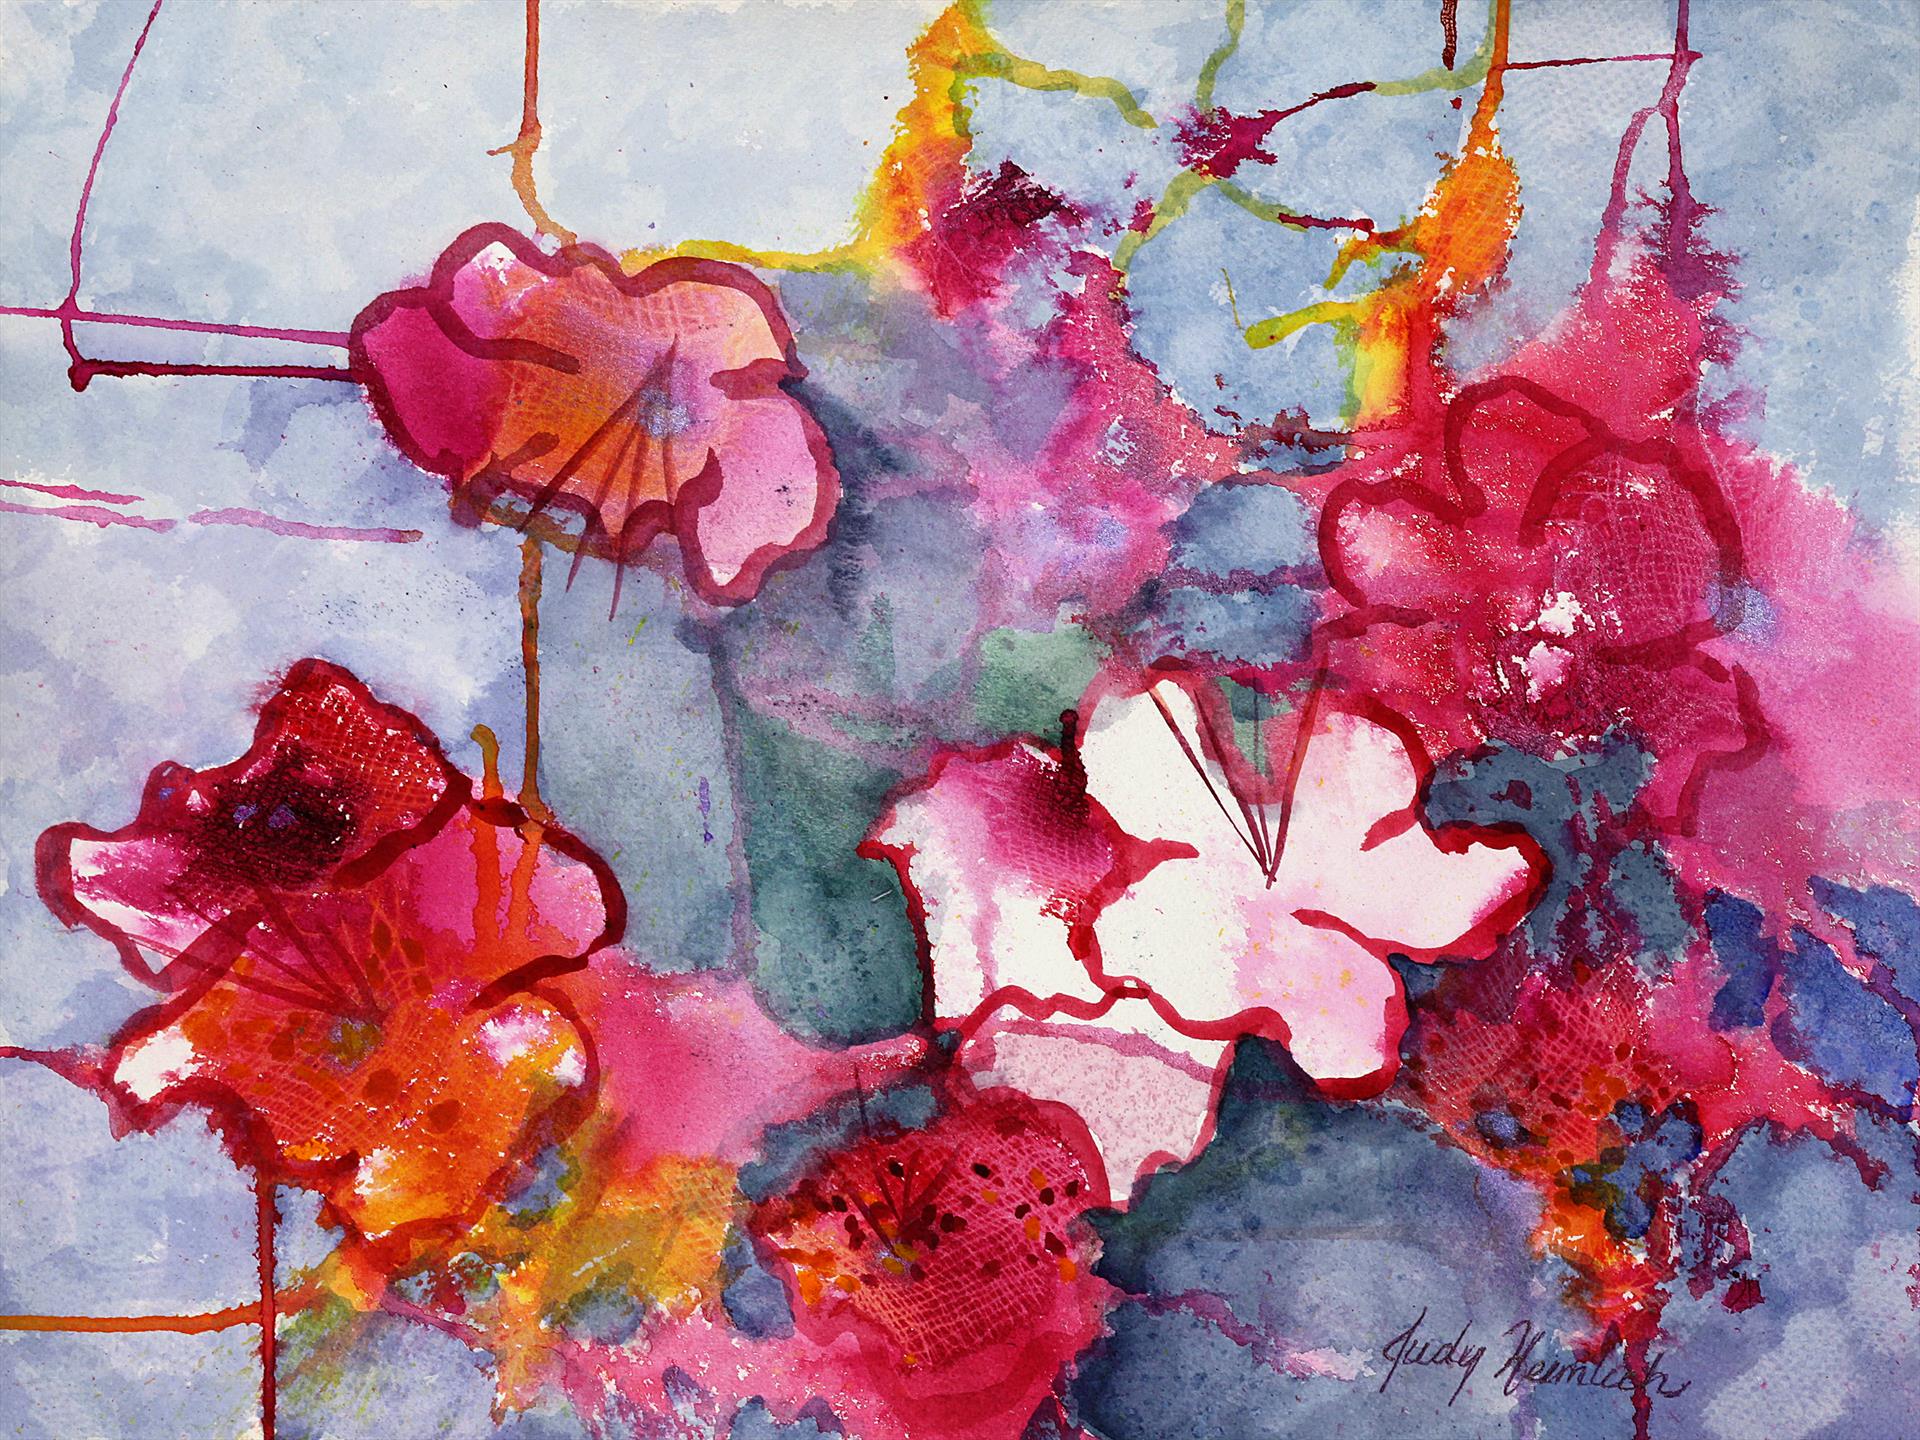 Judy Heimlich - Flower Patterns 22x28 Watercolor $775